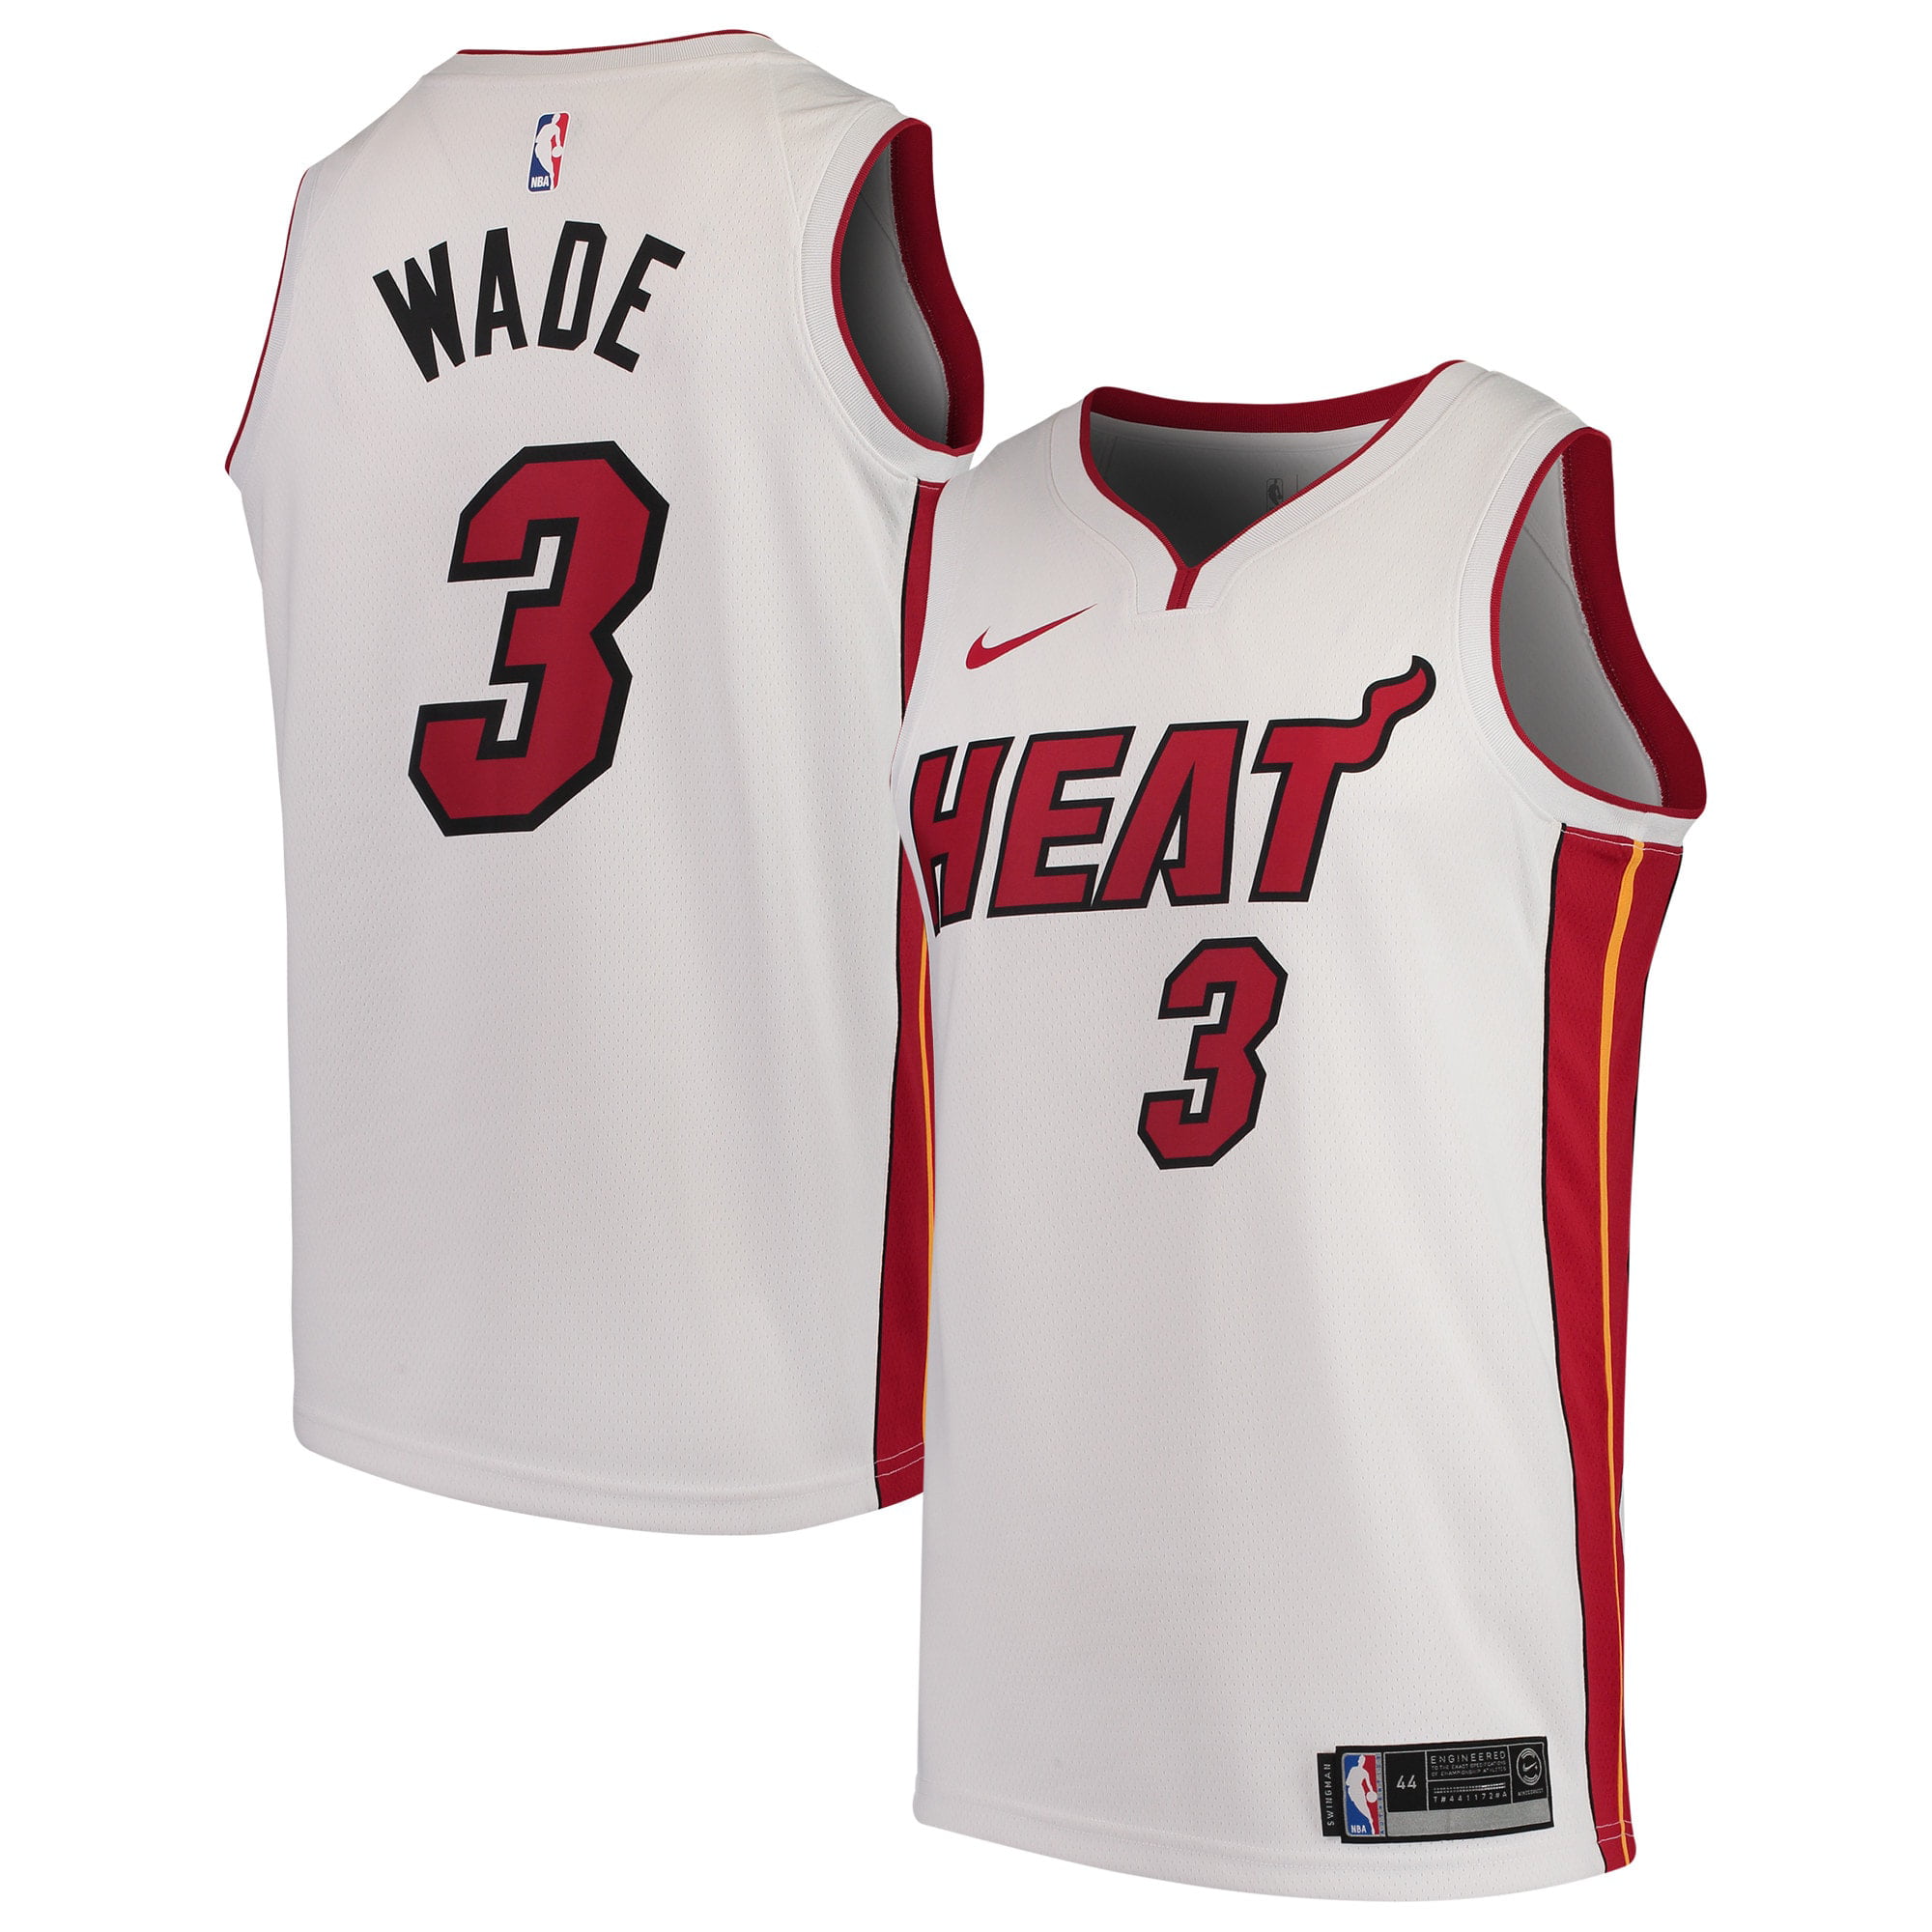 Miami Heat Nike Replica Swingman Jersey 